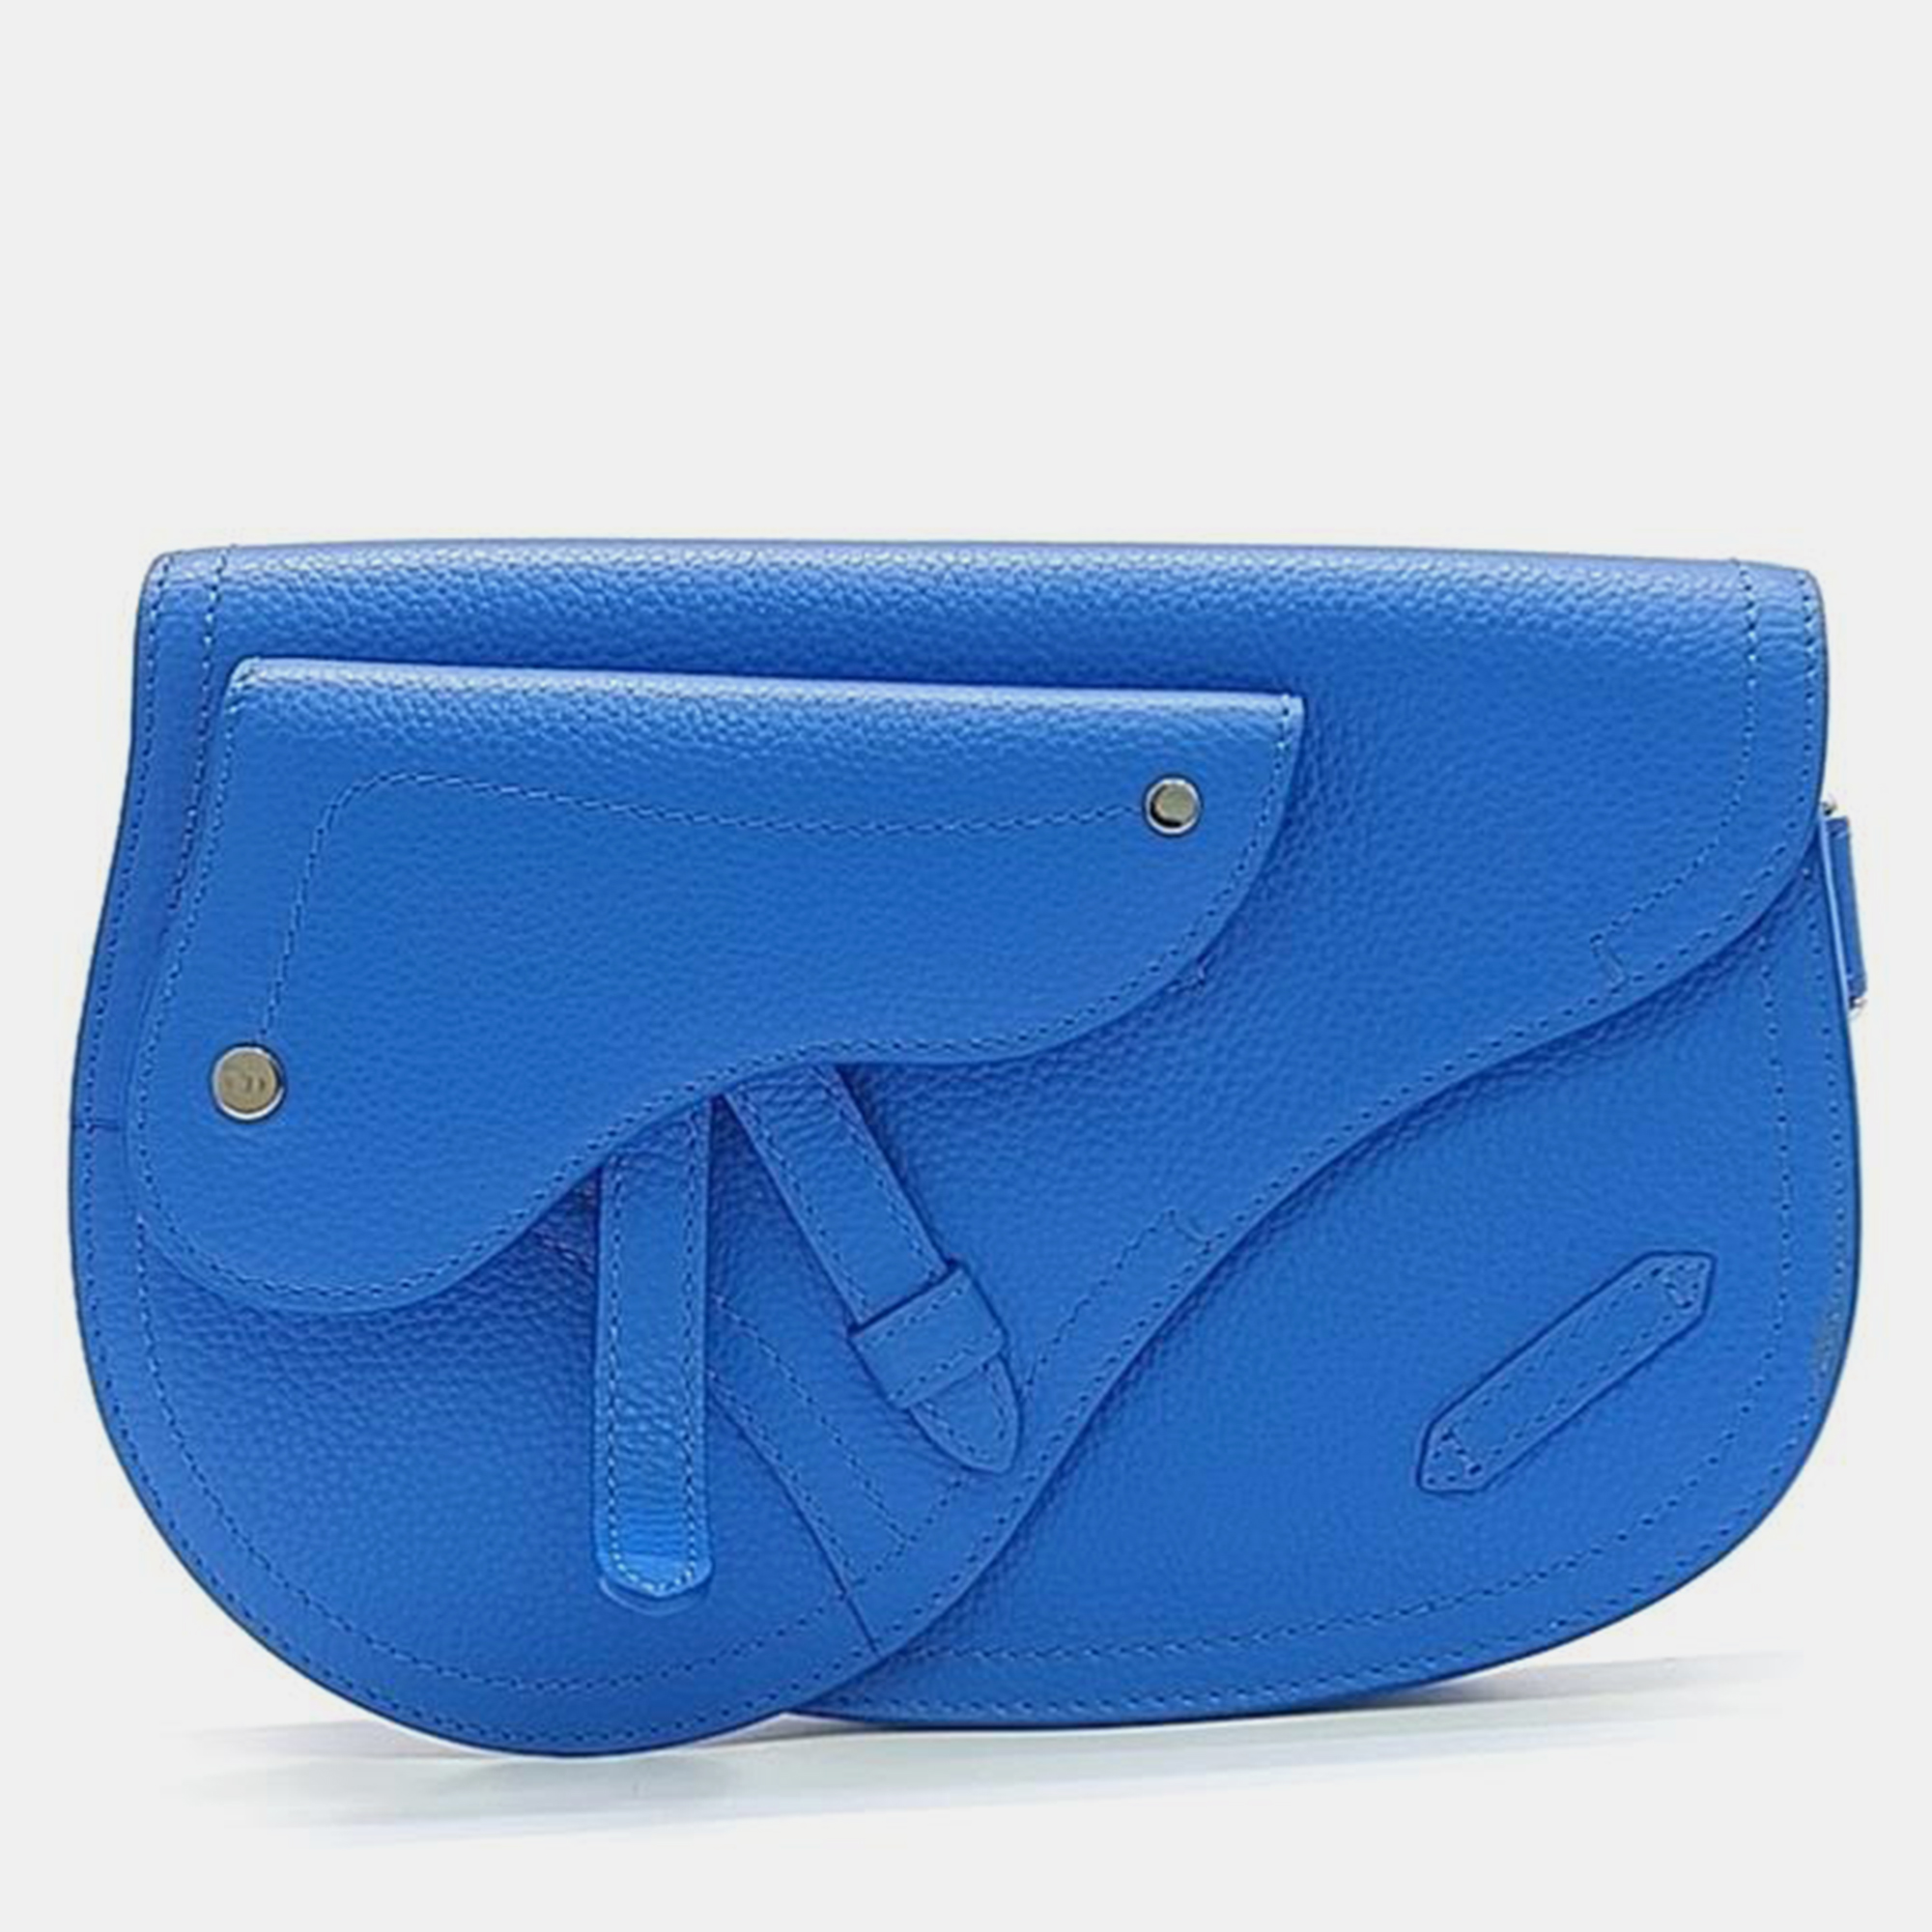 Dior blue leather saddle crossbody bag